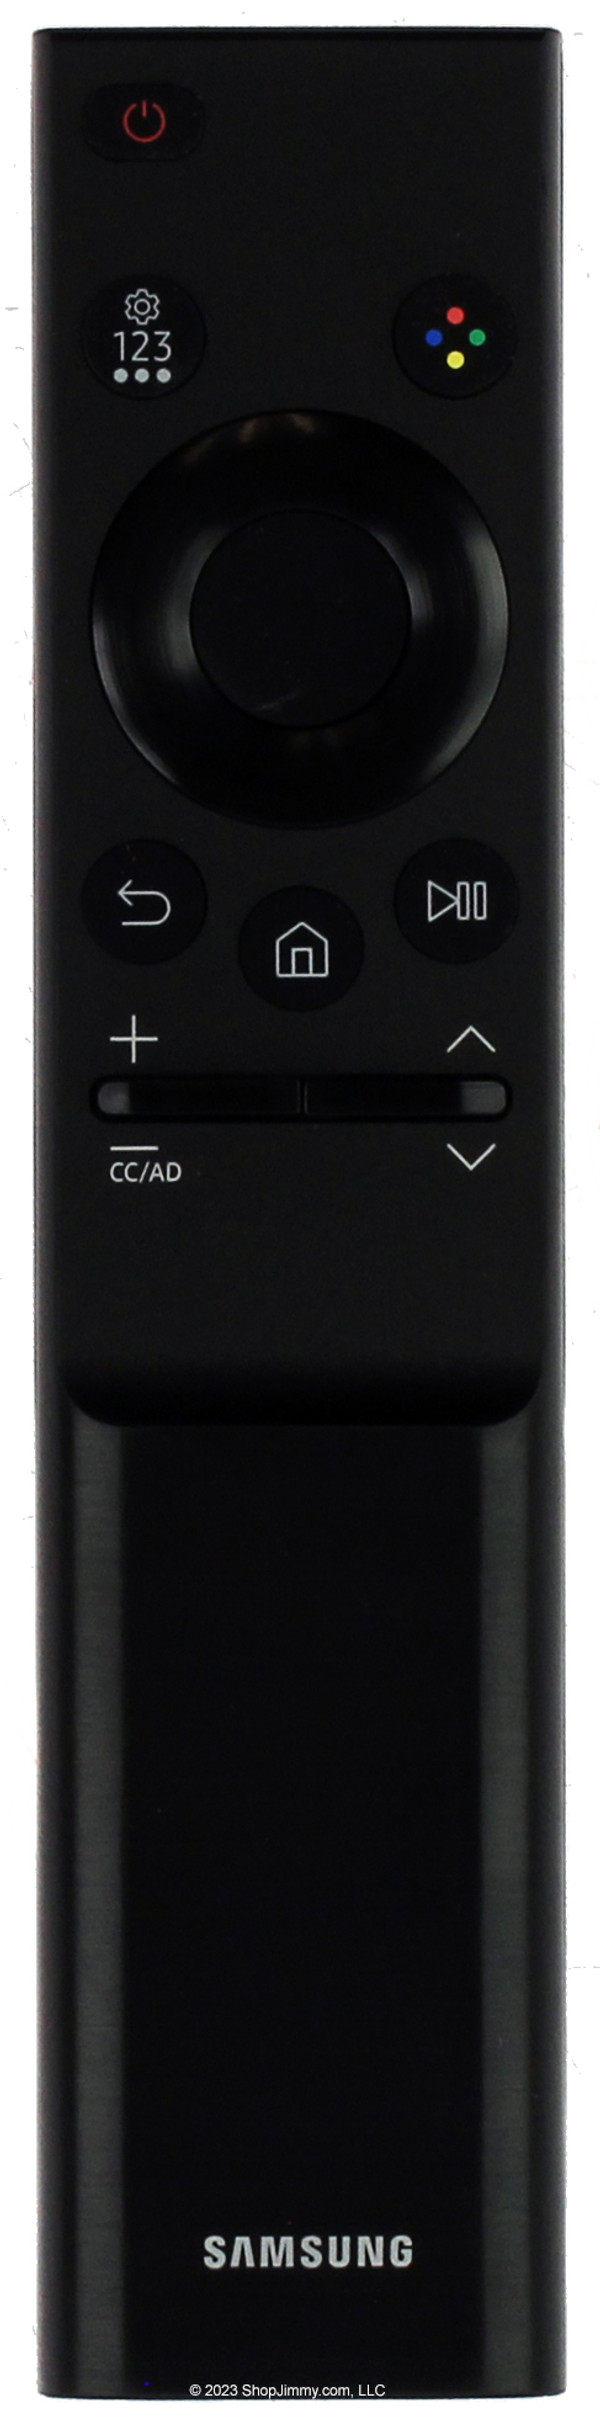 Samsung BN59-01388L Smart Remote Control -- NEW OEM